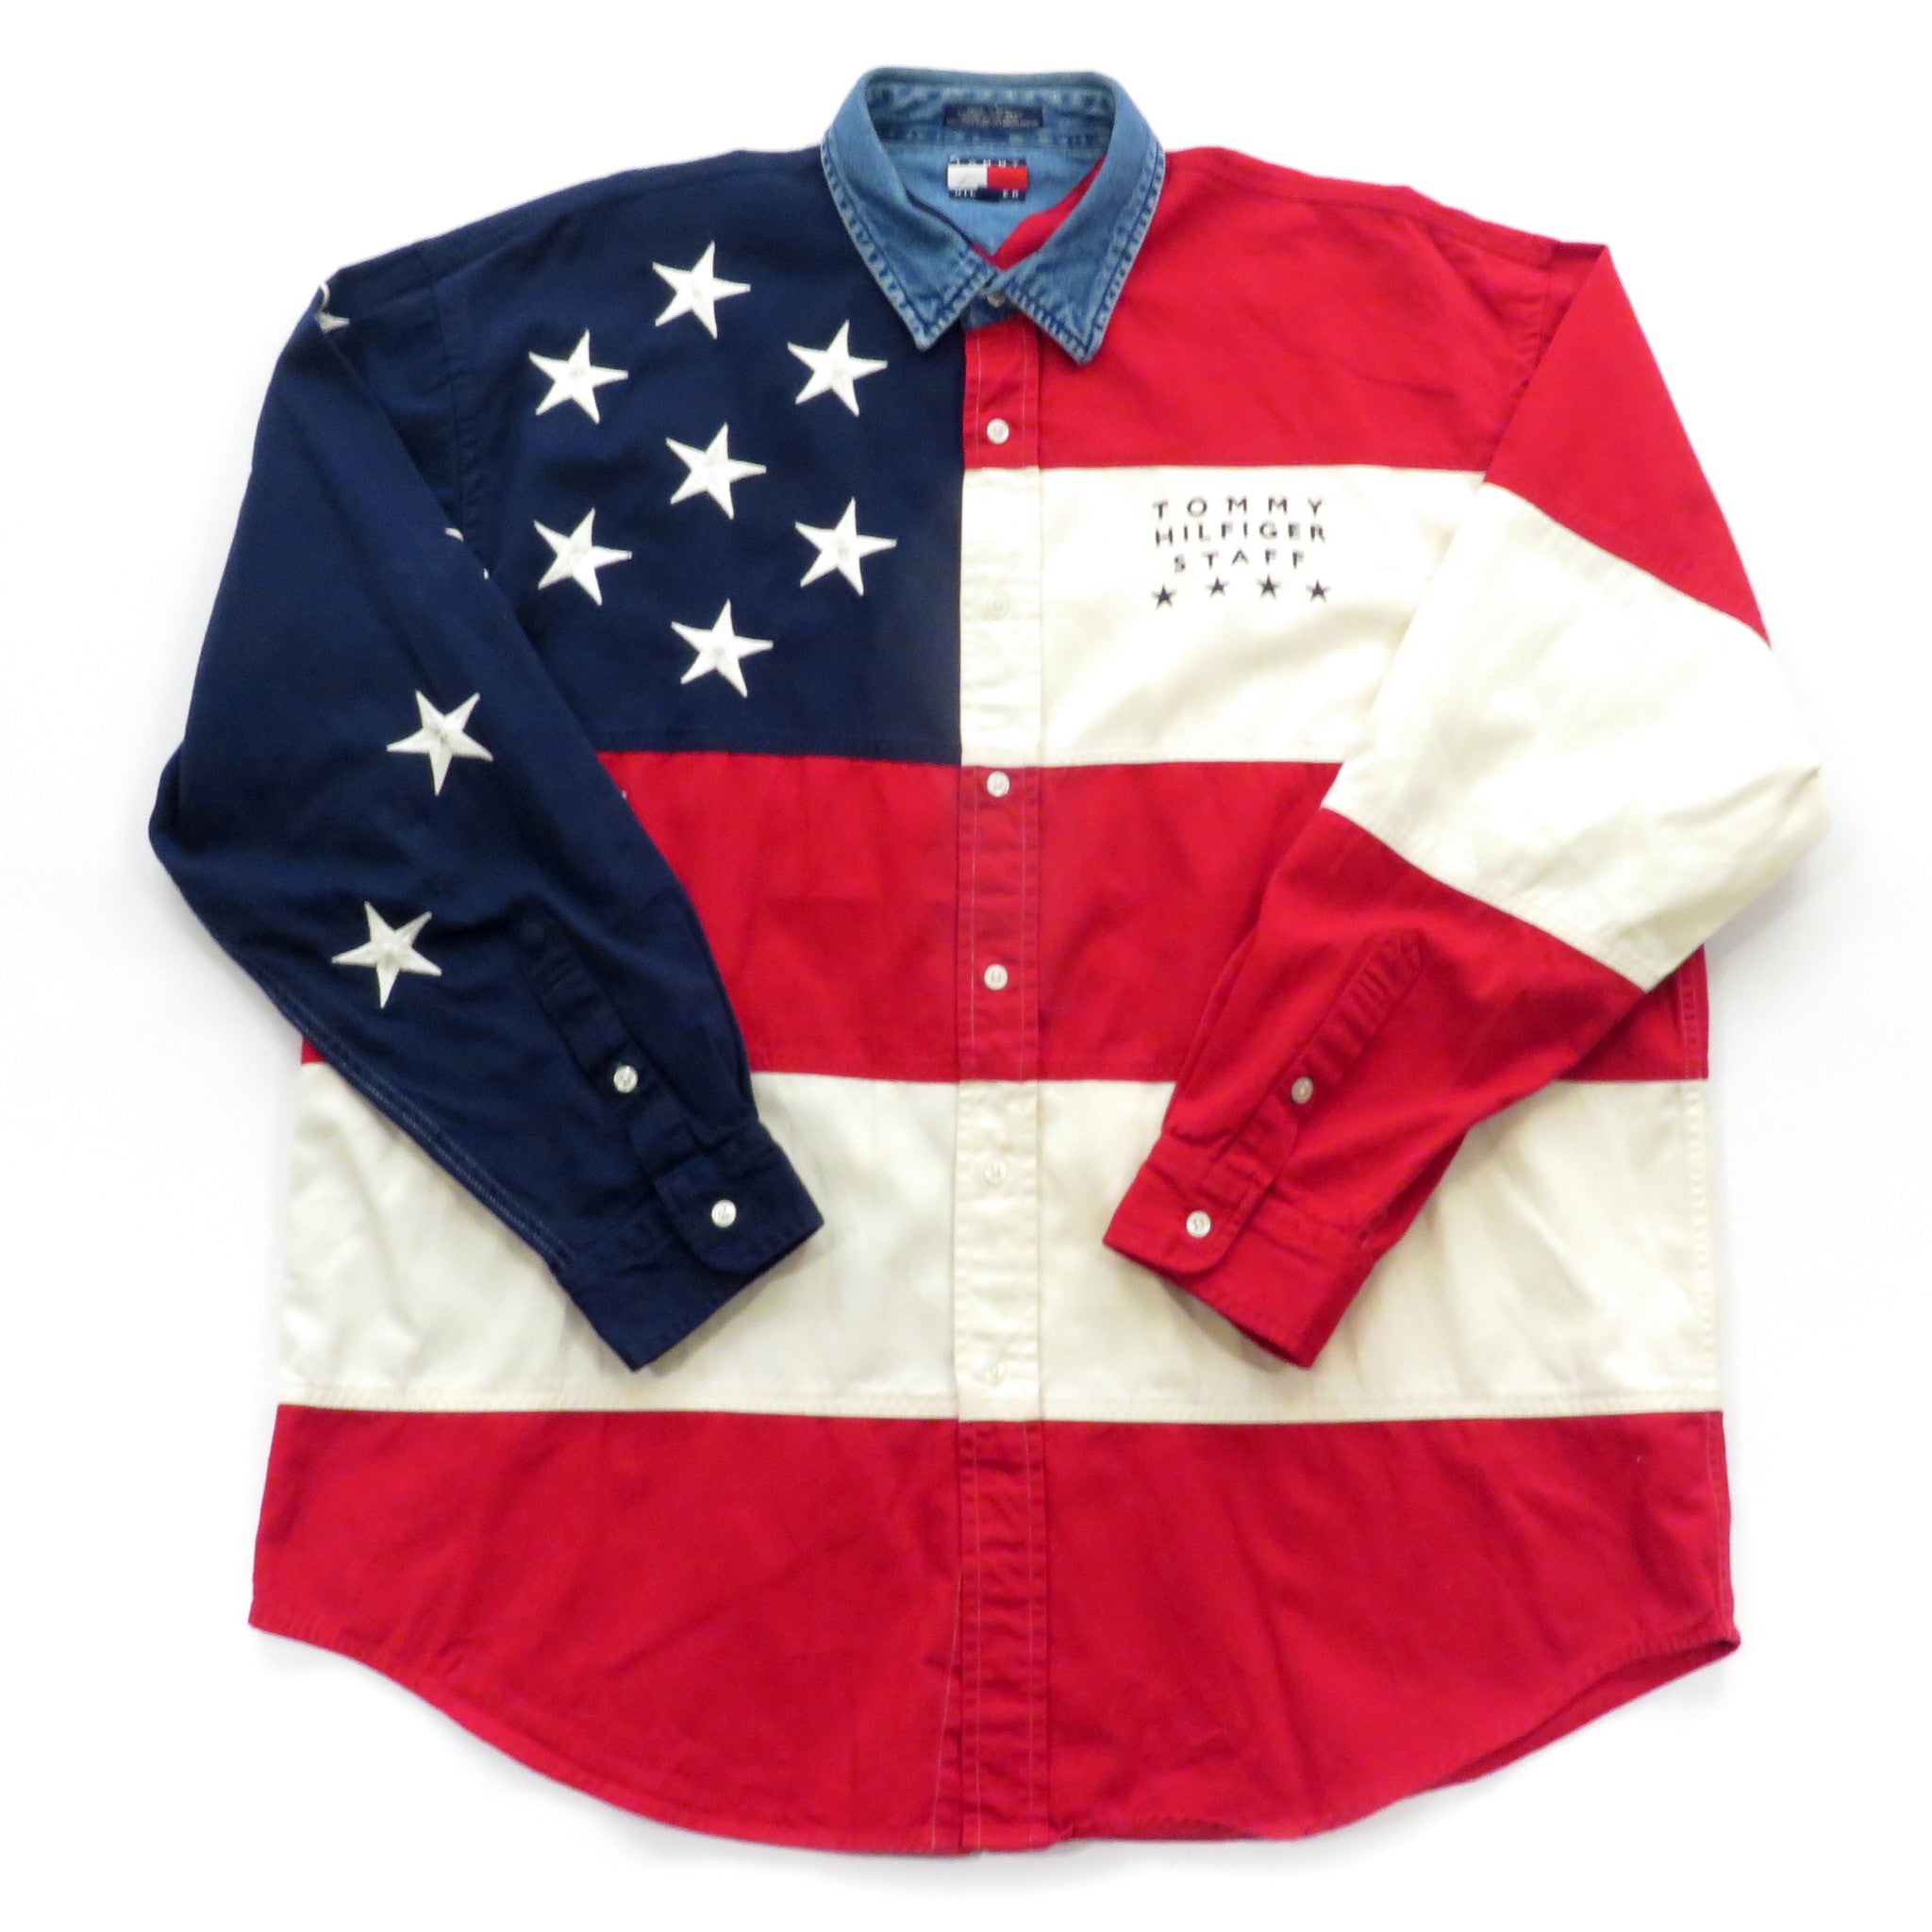 Tommy Hilfiger Staff American Flag Shirt Sz L